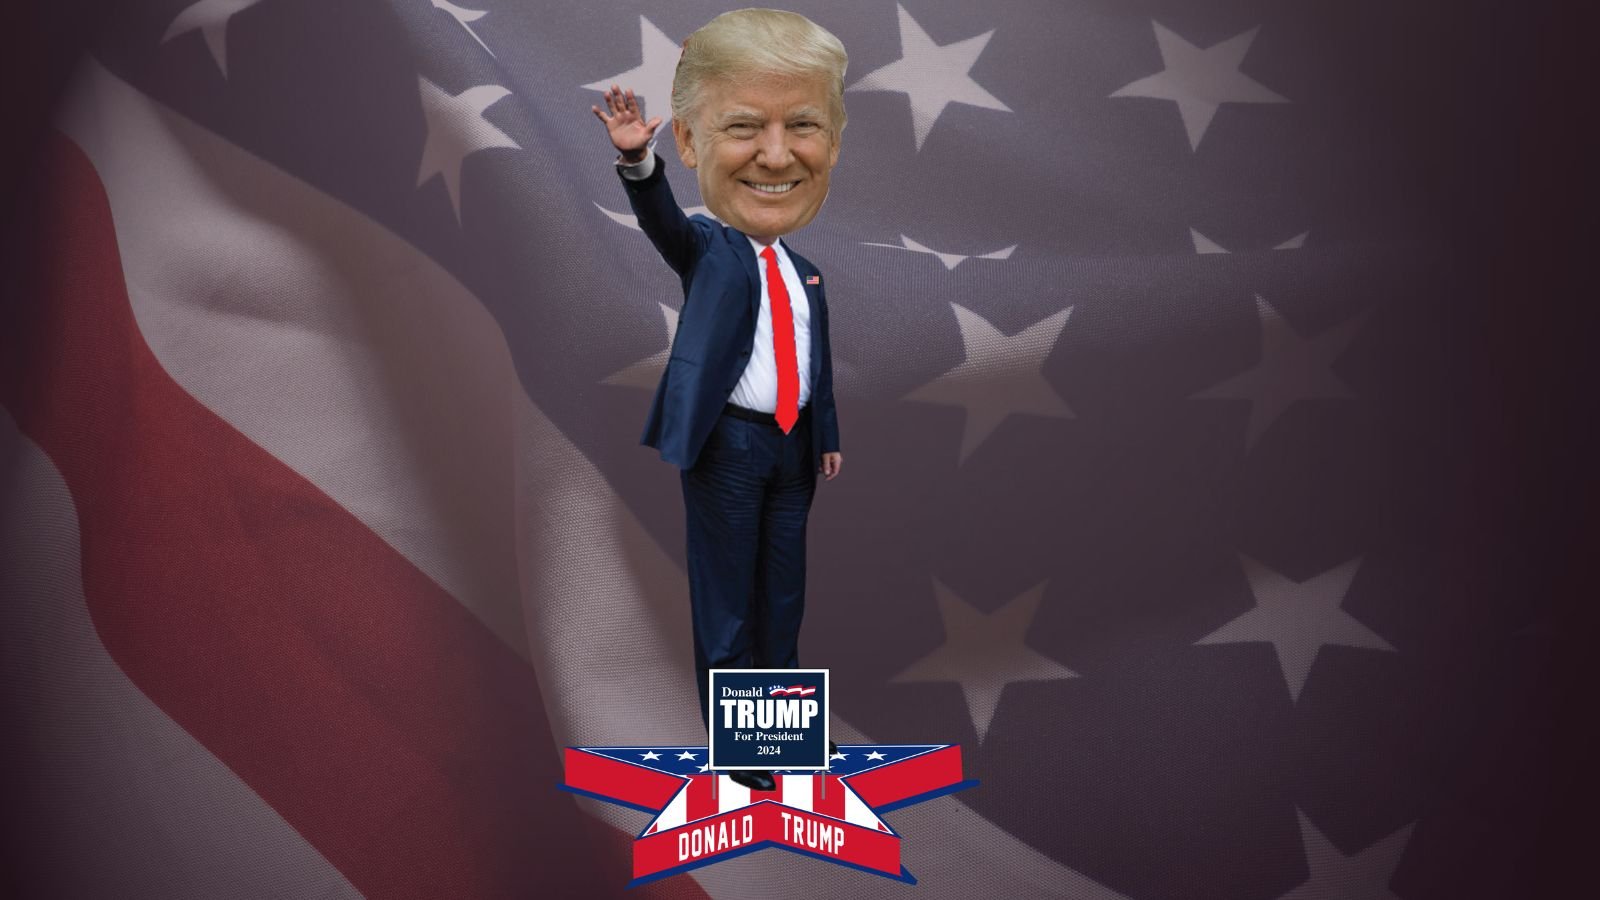 Donald Trump 2024 Presidential Candidate Bobblehead (4).jpg